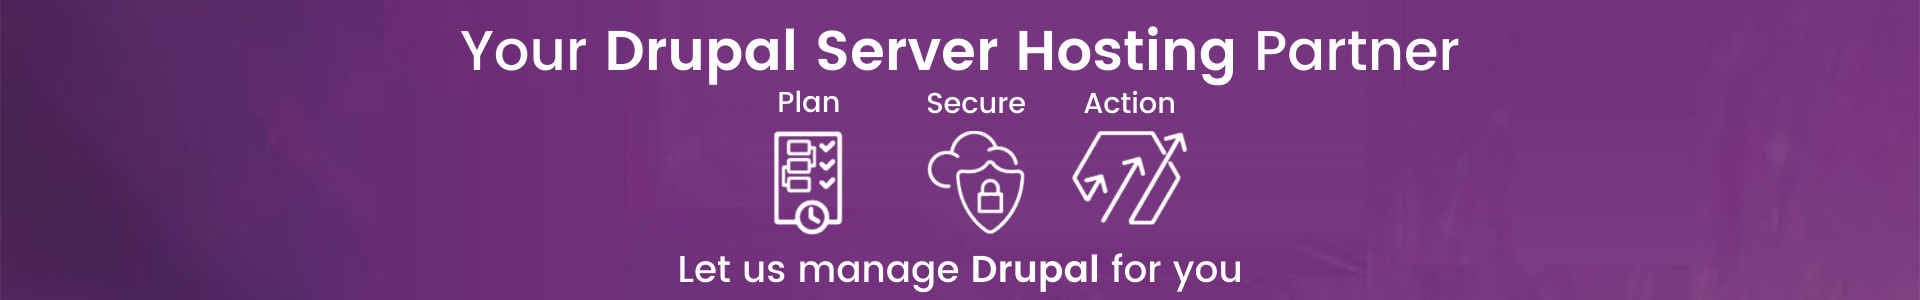 drupal hosting australia